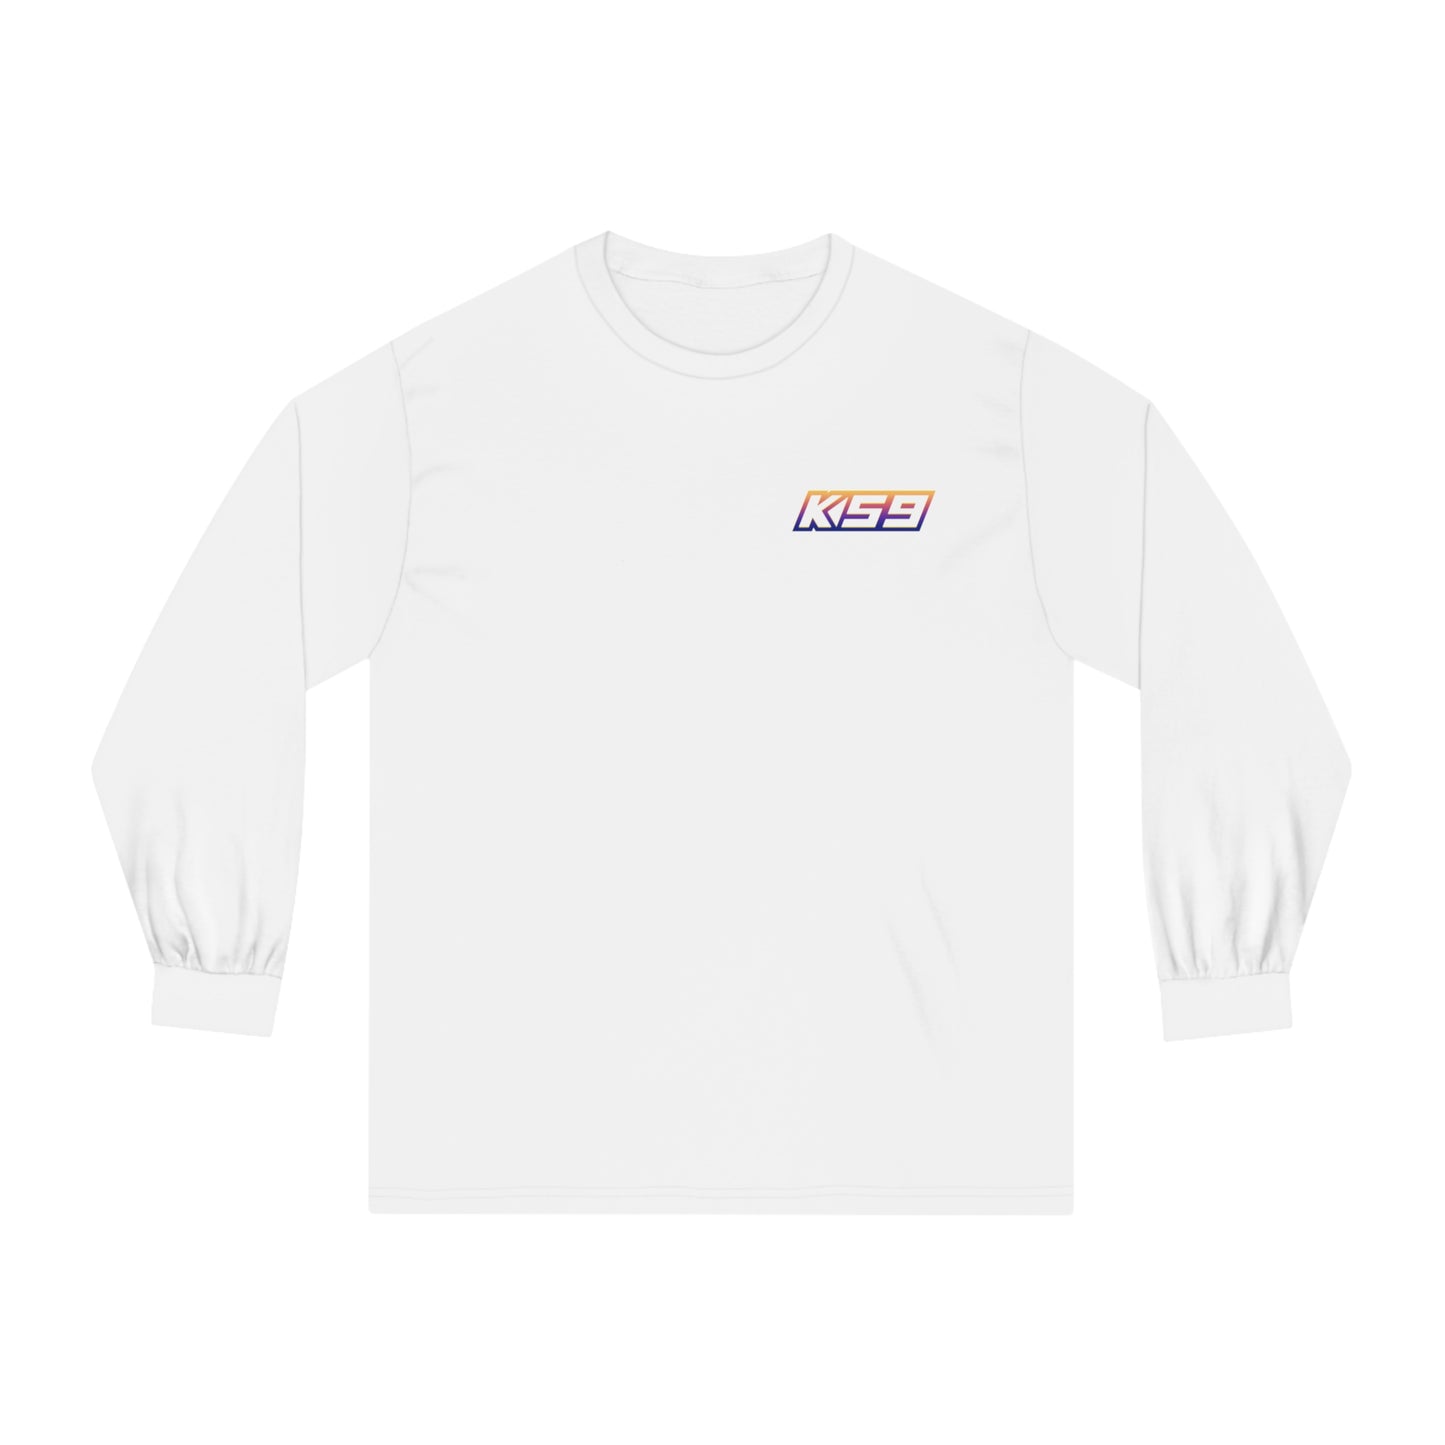 K59 Classic Long Sleeve T-Shirt